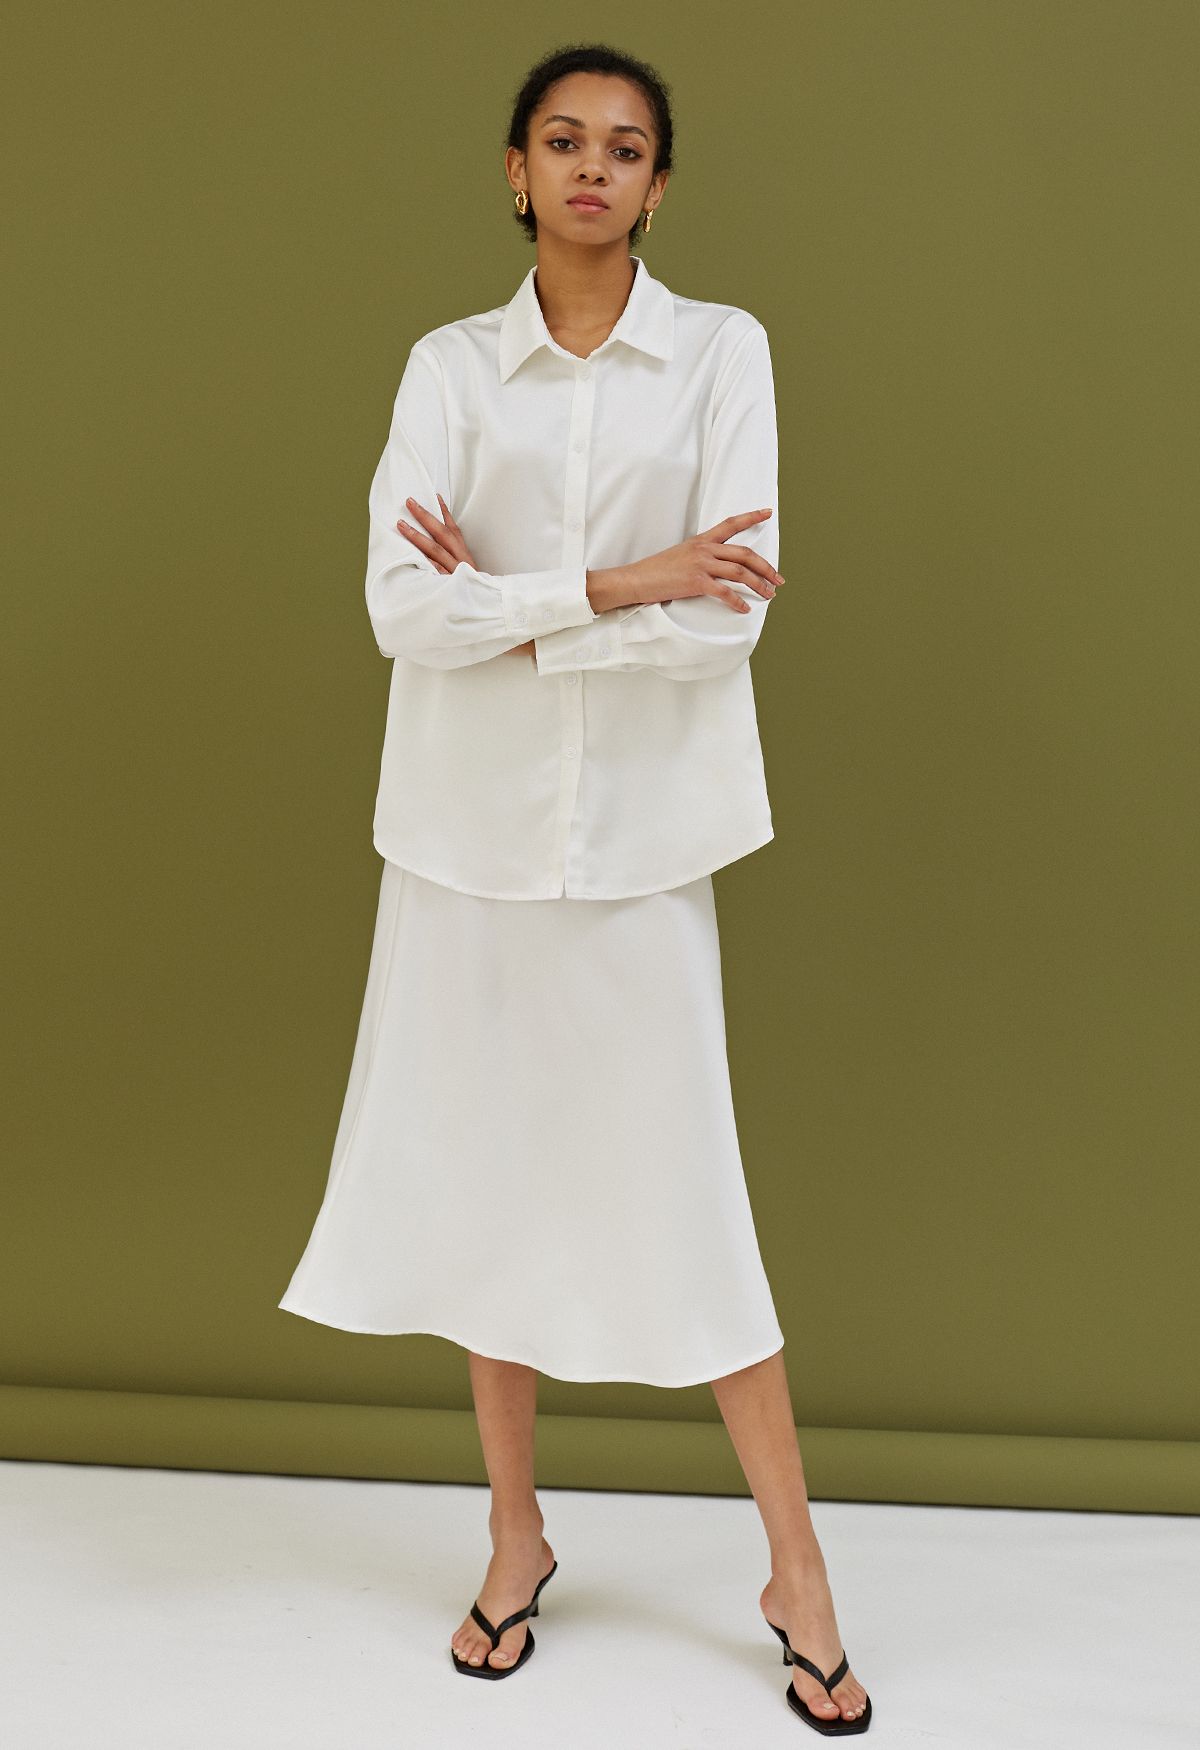 Satin Finish Bias Cut Midi Skirt in White